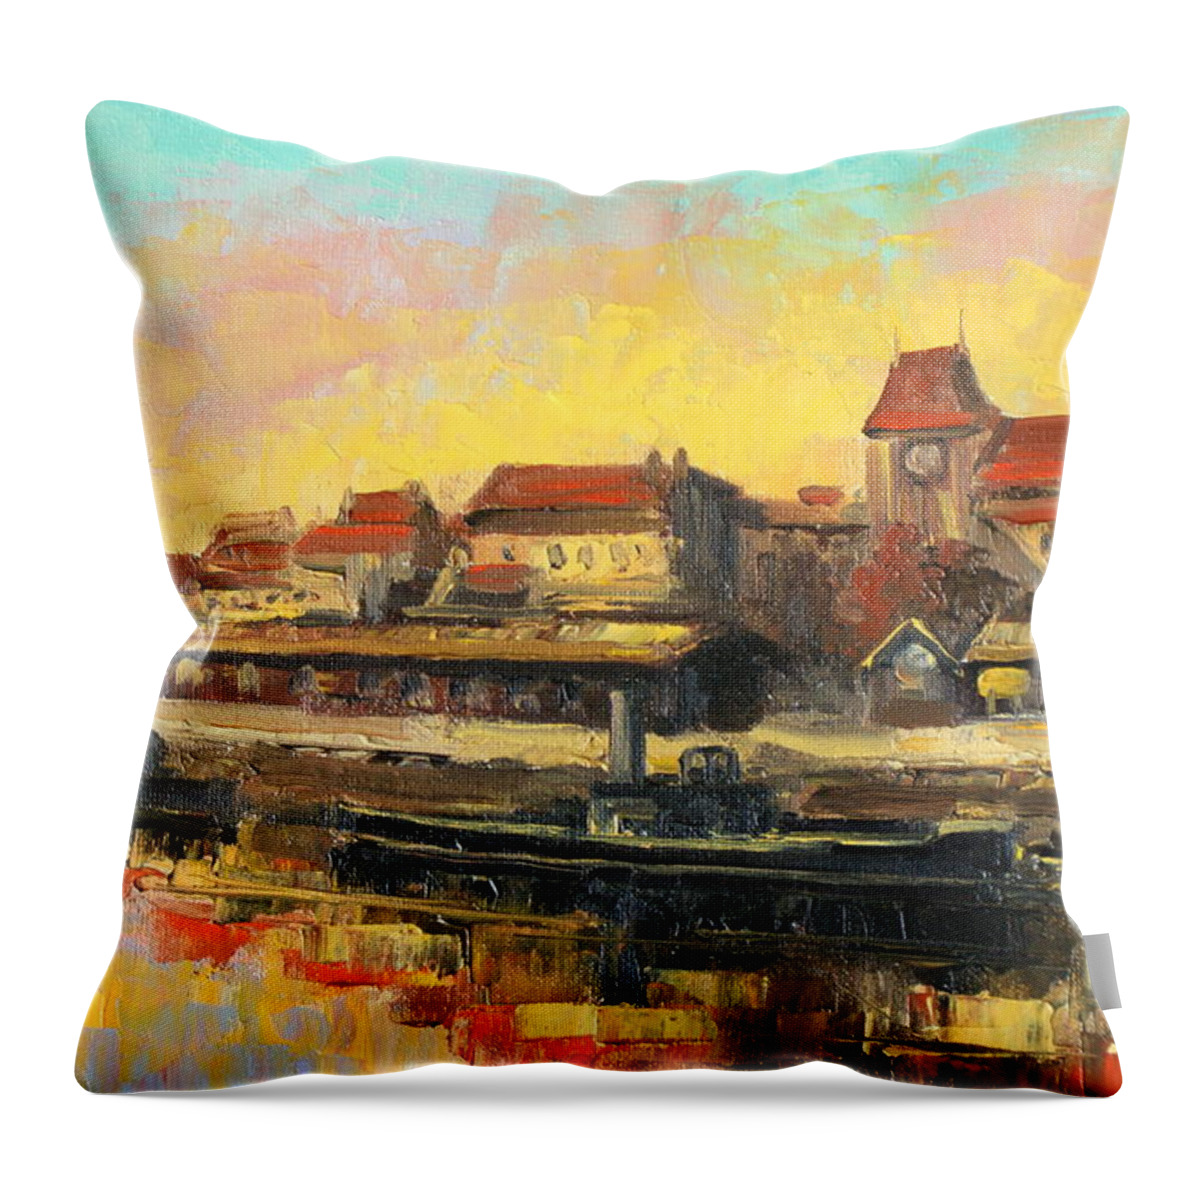 Torun Throw Pillow featuring the painting Old Torun by Luke Karcz